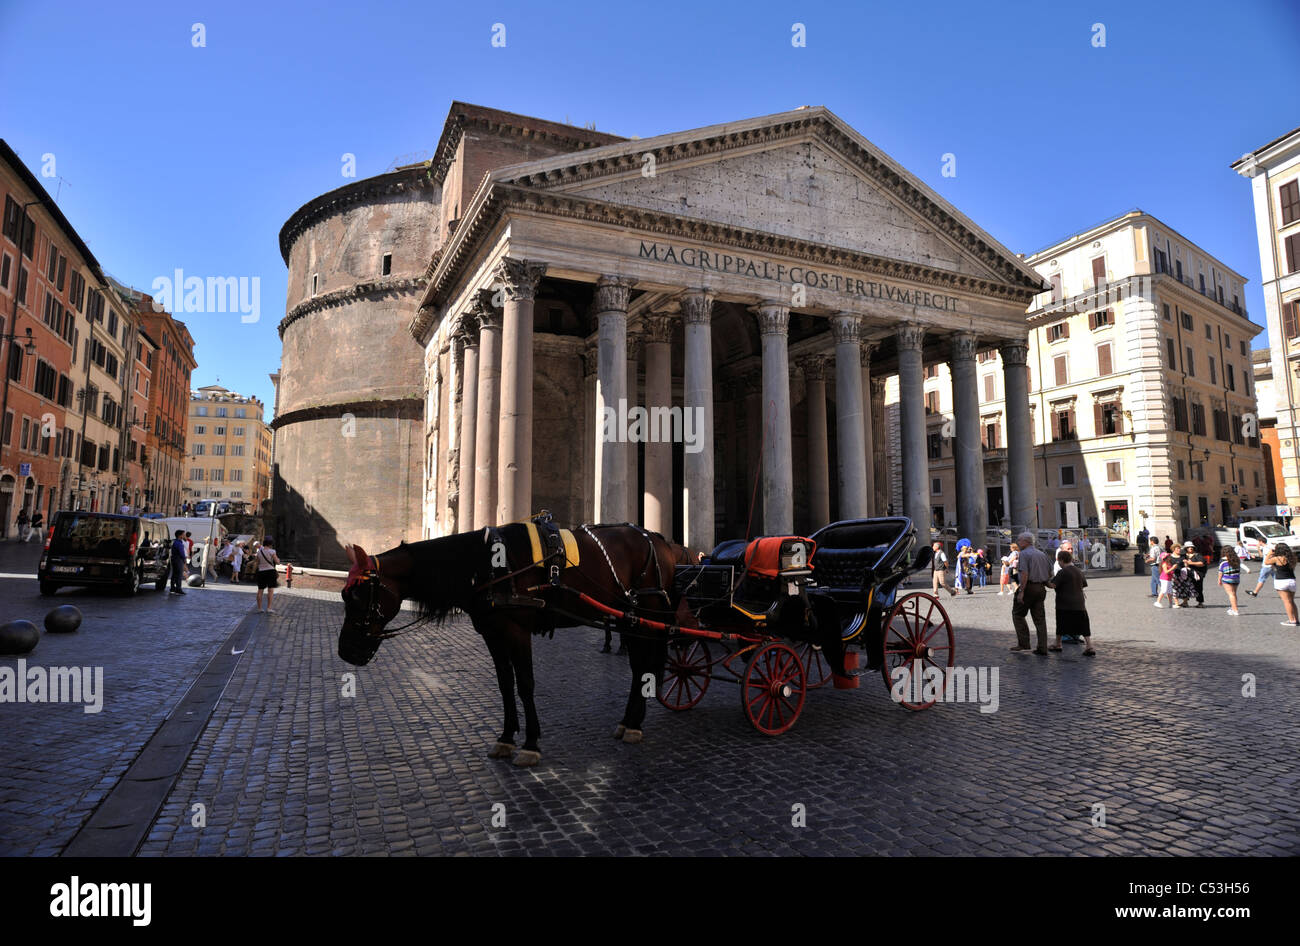 Italy, Rome, Piazza della Rotonda, Pantheon Stock Photo